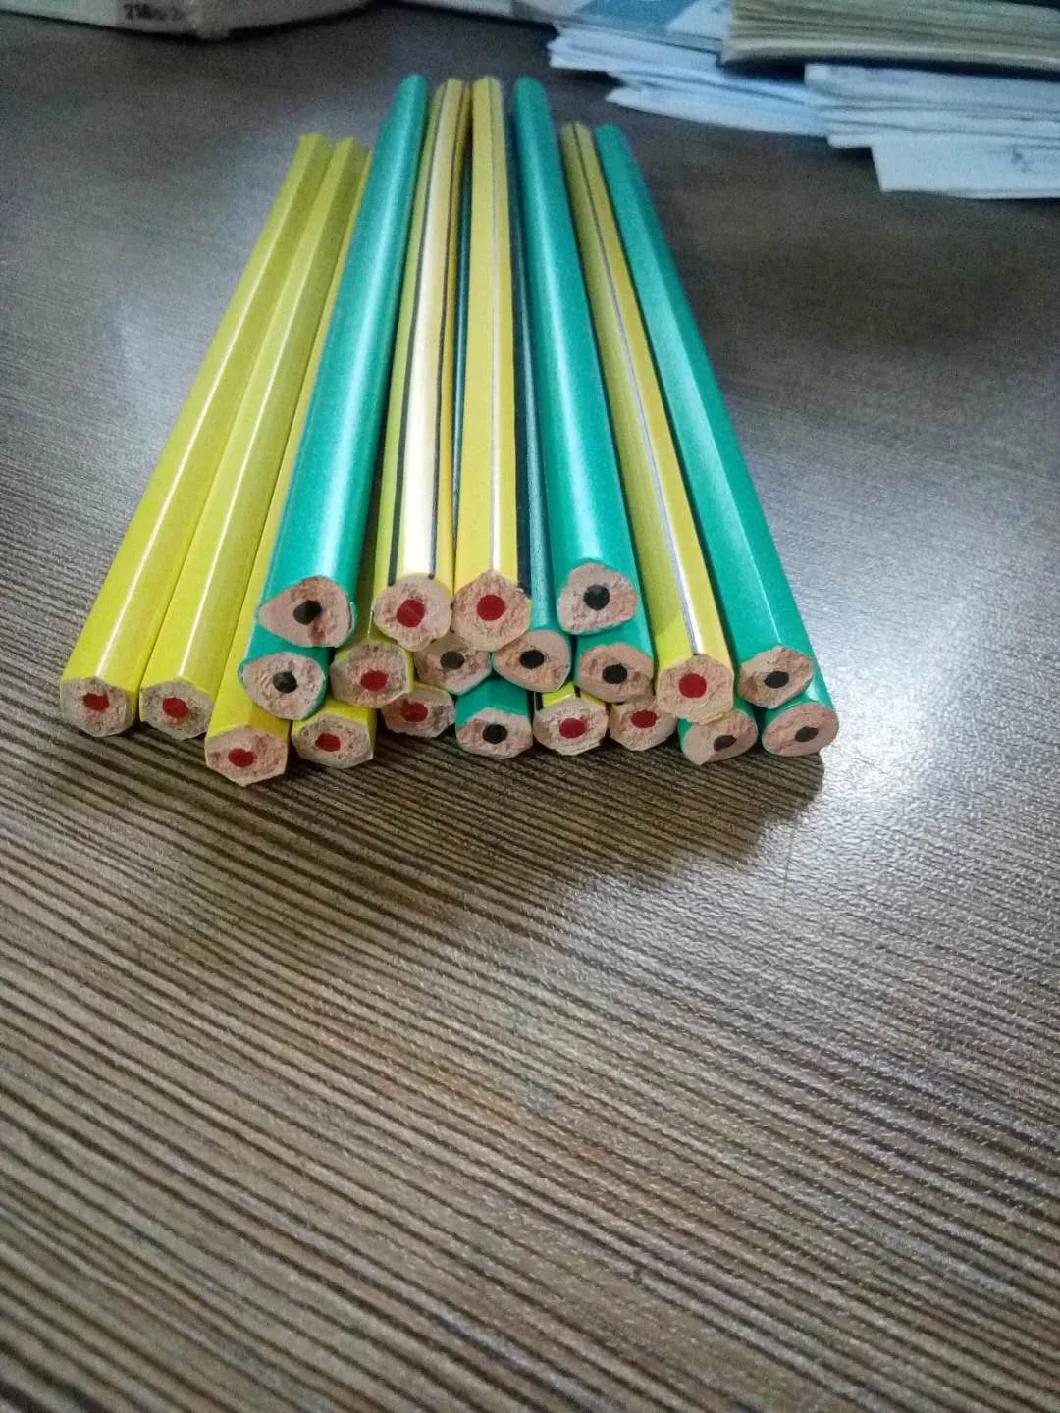 Wood-Free Plastic Pencil Making Machine